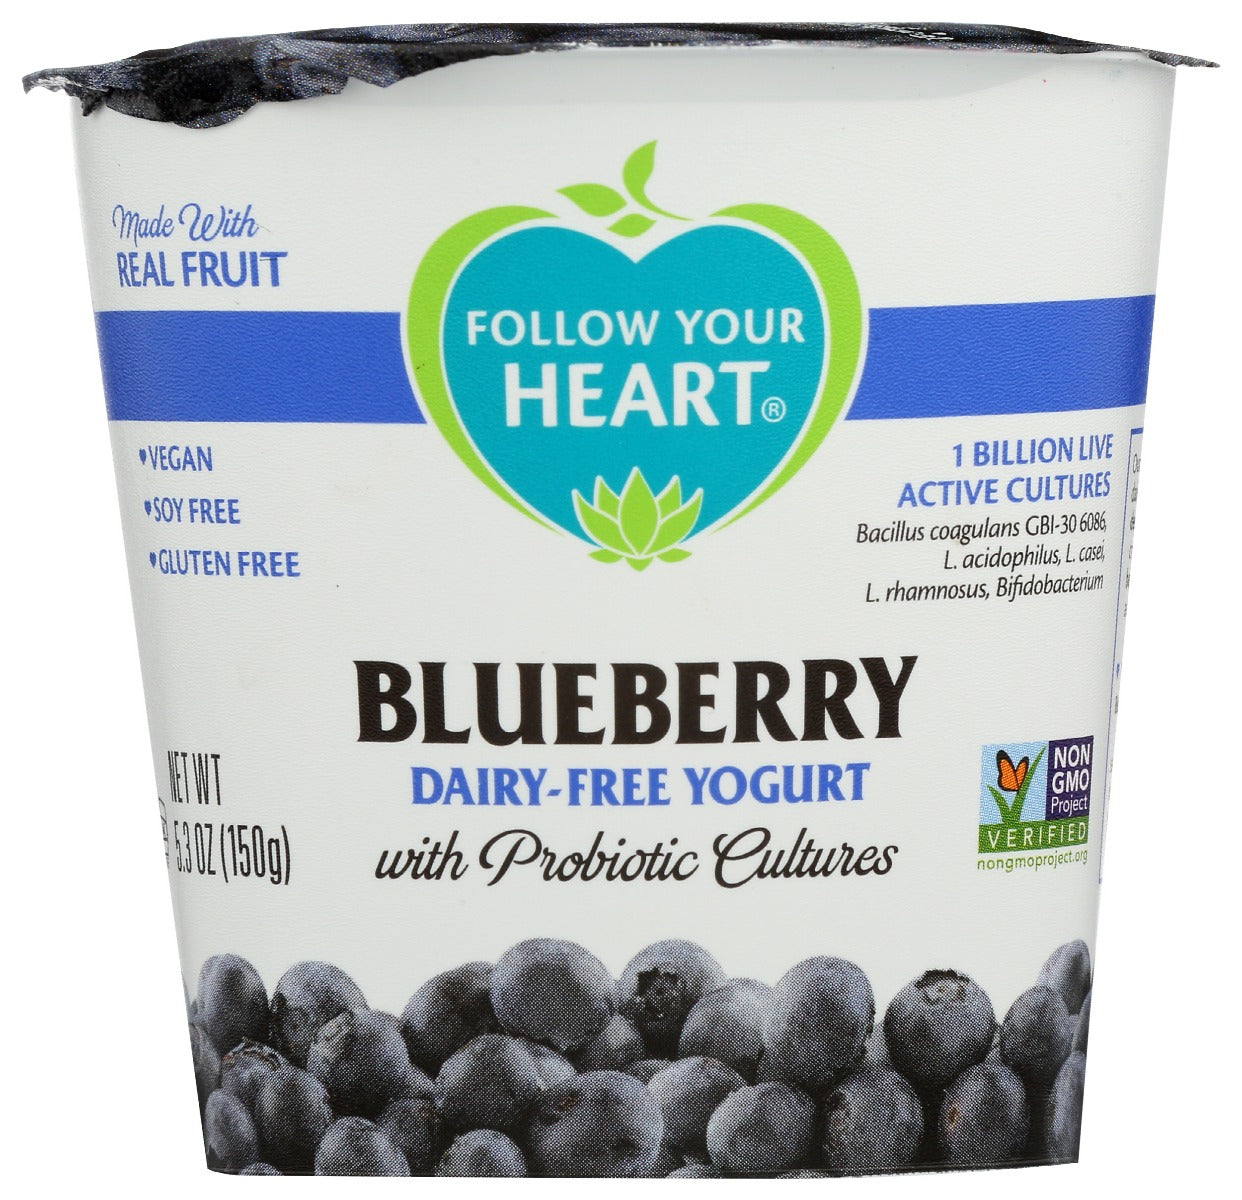 FOLLOW YOUR HEART: Blueberry Dairy-Free Yogurt, 5.3 oz - Vending Business Solutions